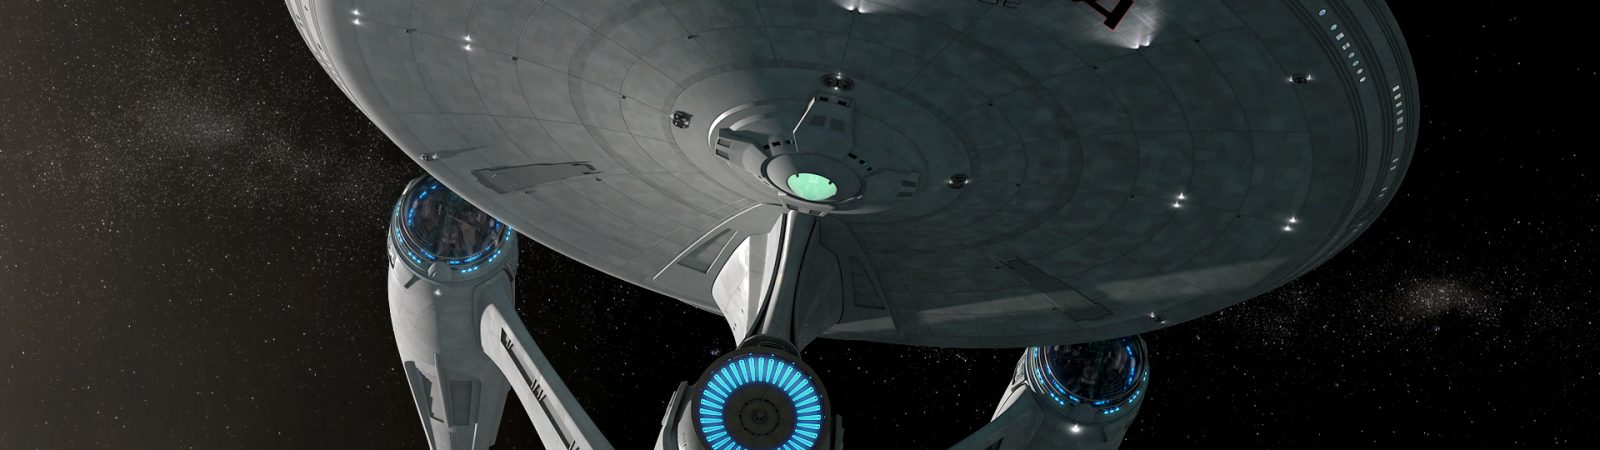 Voyager progress #7